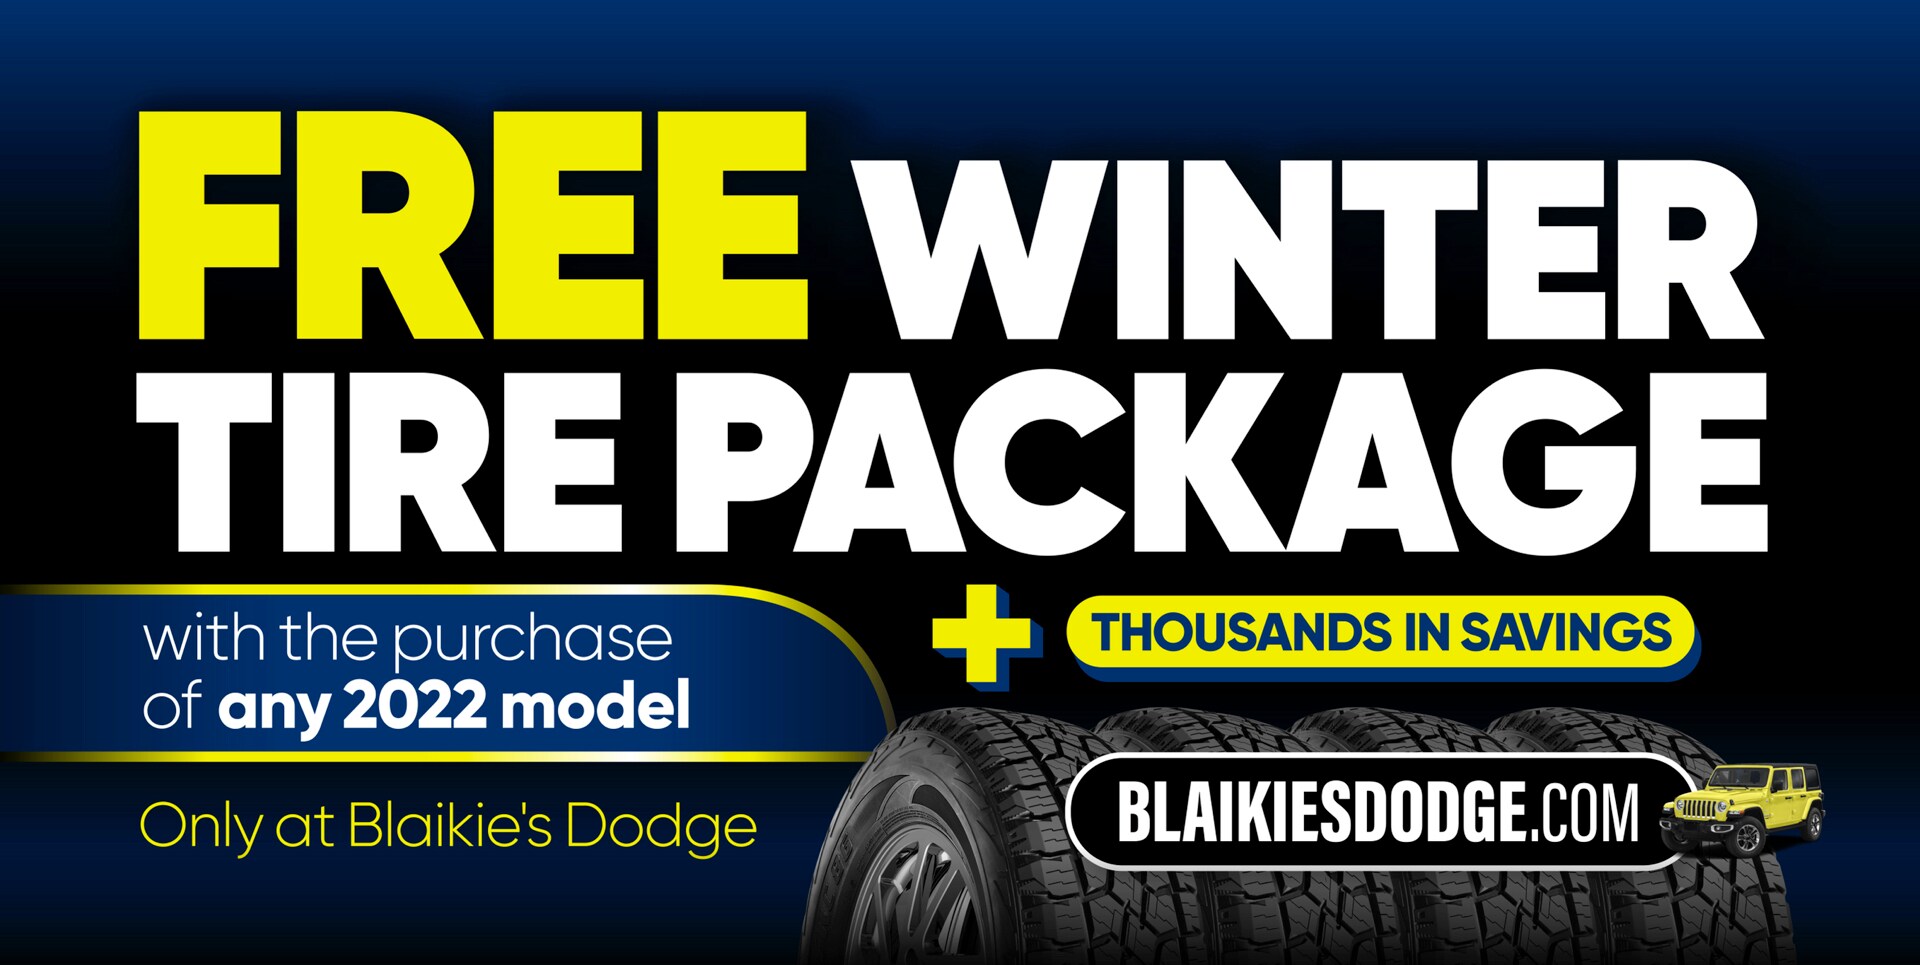 Blaikies 2022 Free Winter Package